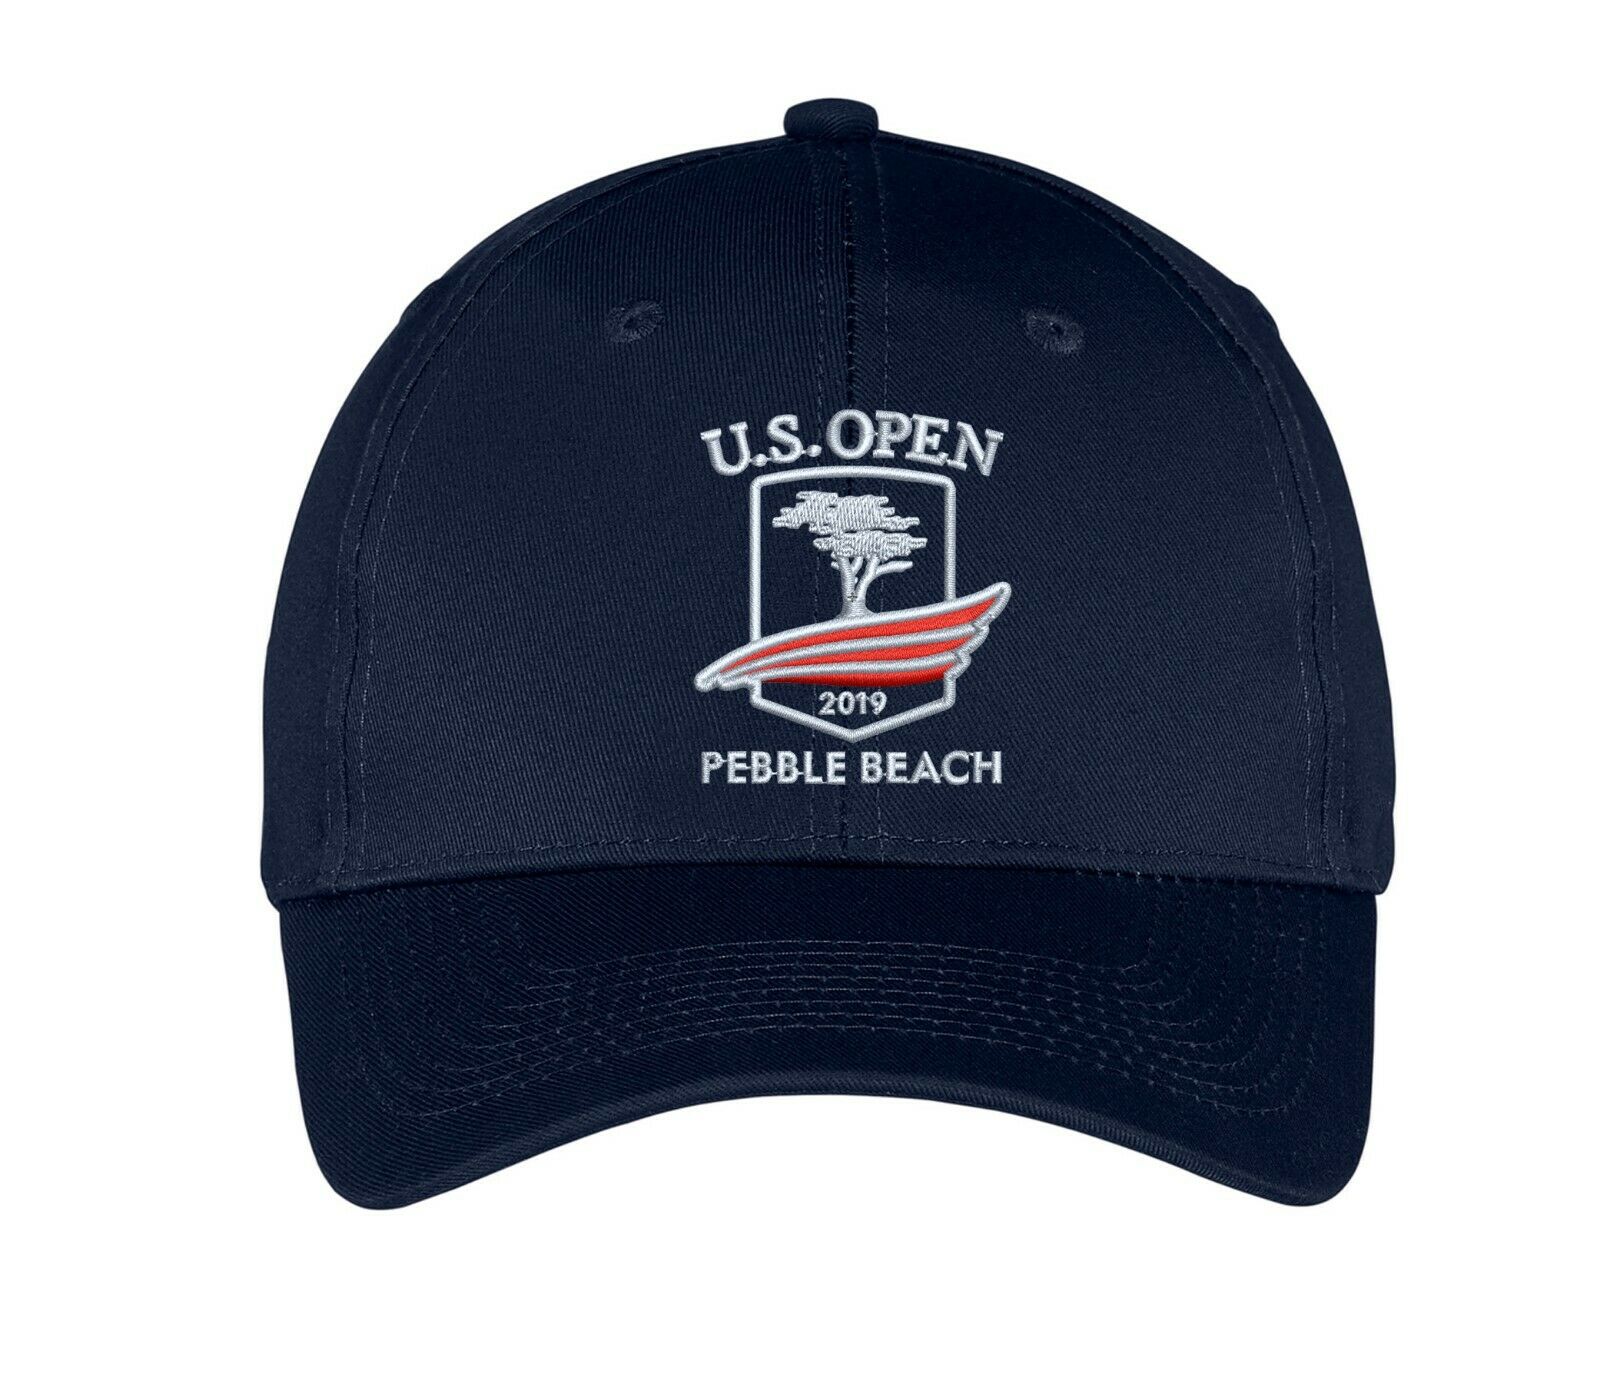 2019 Us Open Pebble Beach Golf Tournament Embroidered Golf Hat Cap